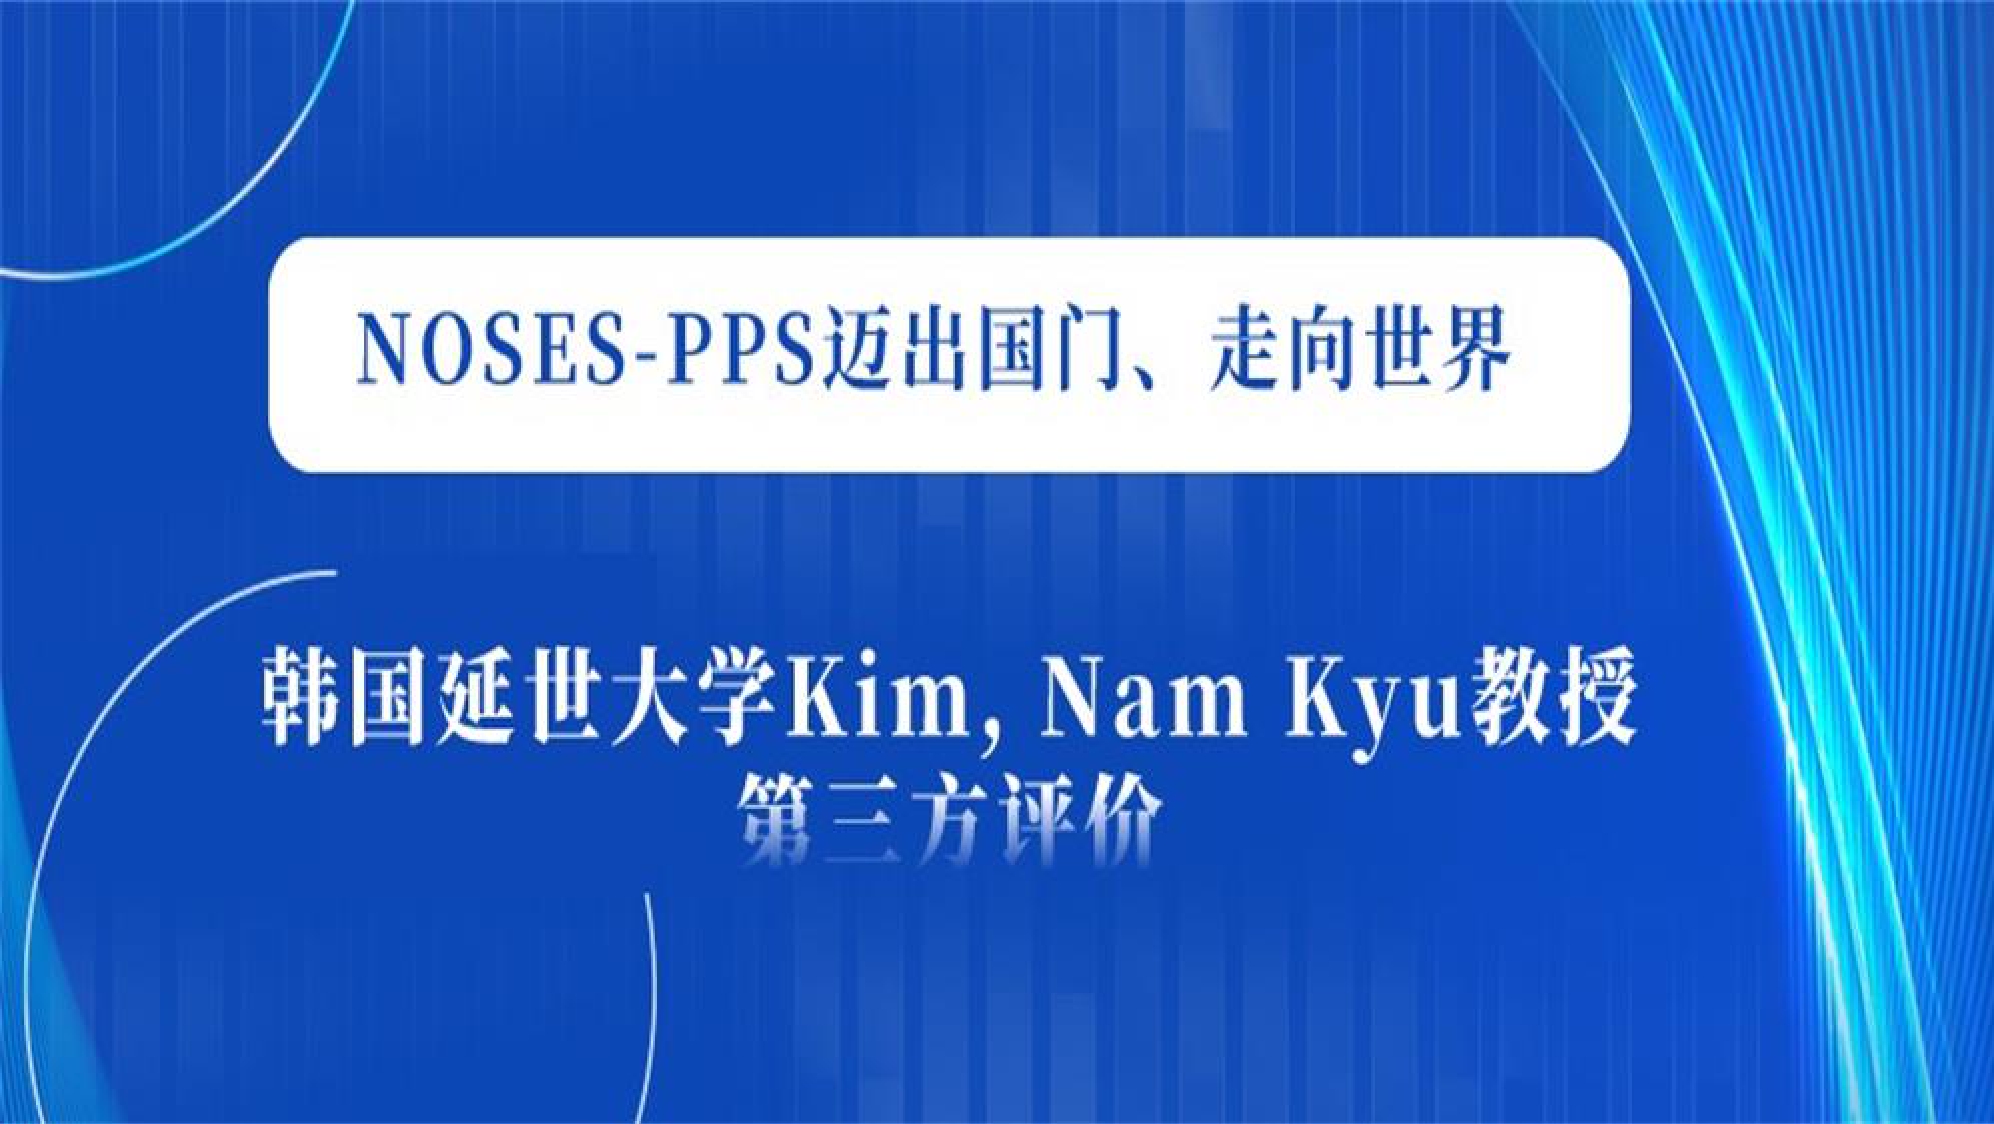 NOSES-PPS受国际赞誉一Kim,Nam Kyu三连赞